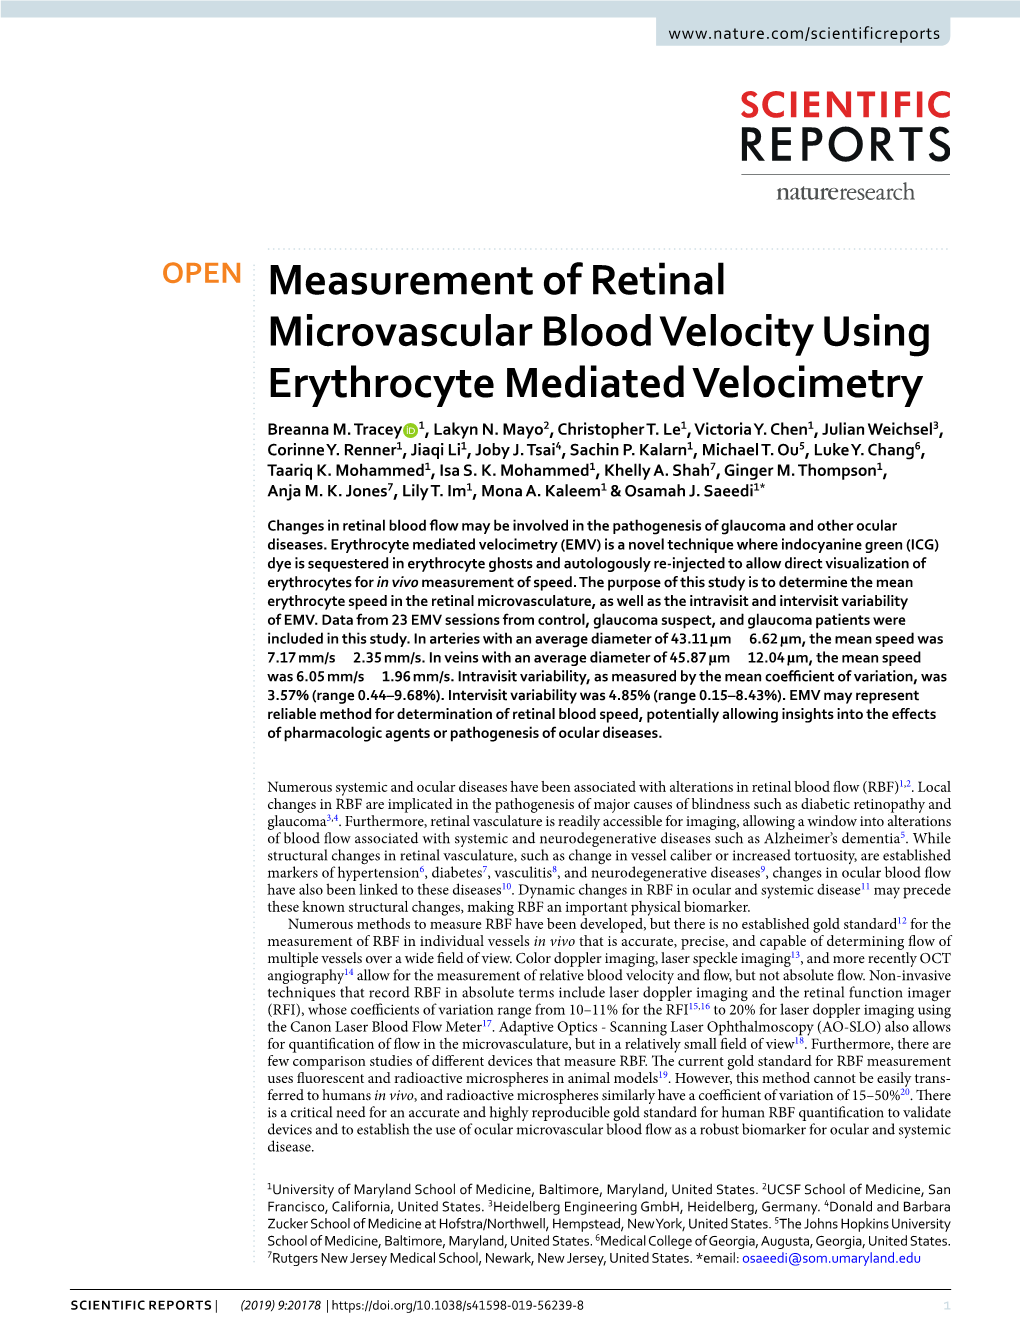 Measurement of Retinal Microvascular Blood Velocity Using Erythrocyte Mediated Velocimetry Breanna M